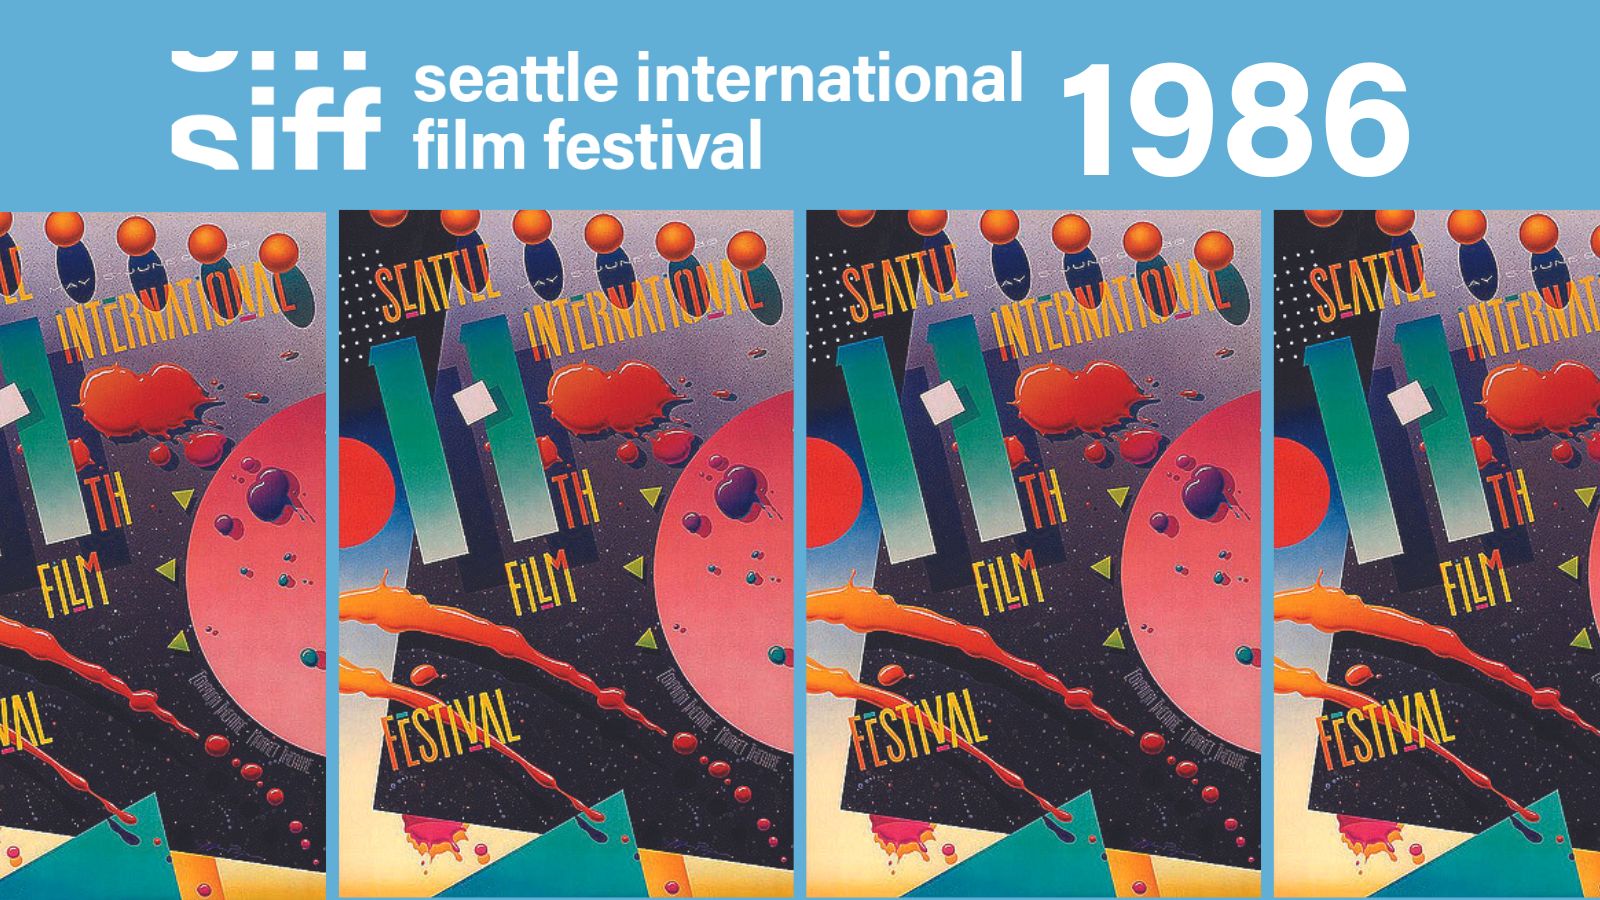 Seattle International Film Festival 1986